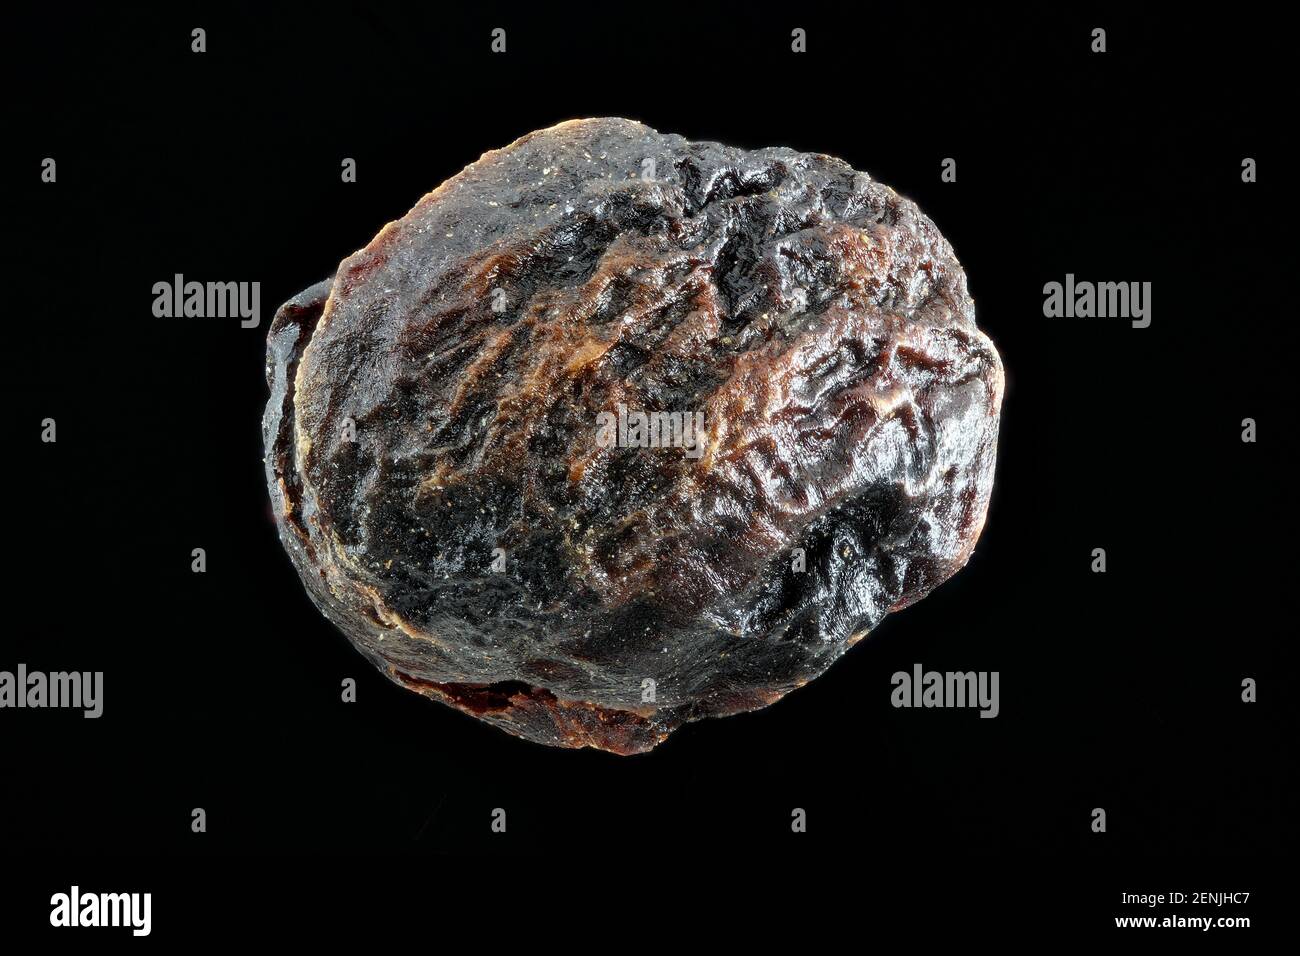 Pimenta dioica, Allspice, Piment, close up, seed, 6 mm in diameter Stock Photo